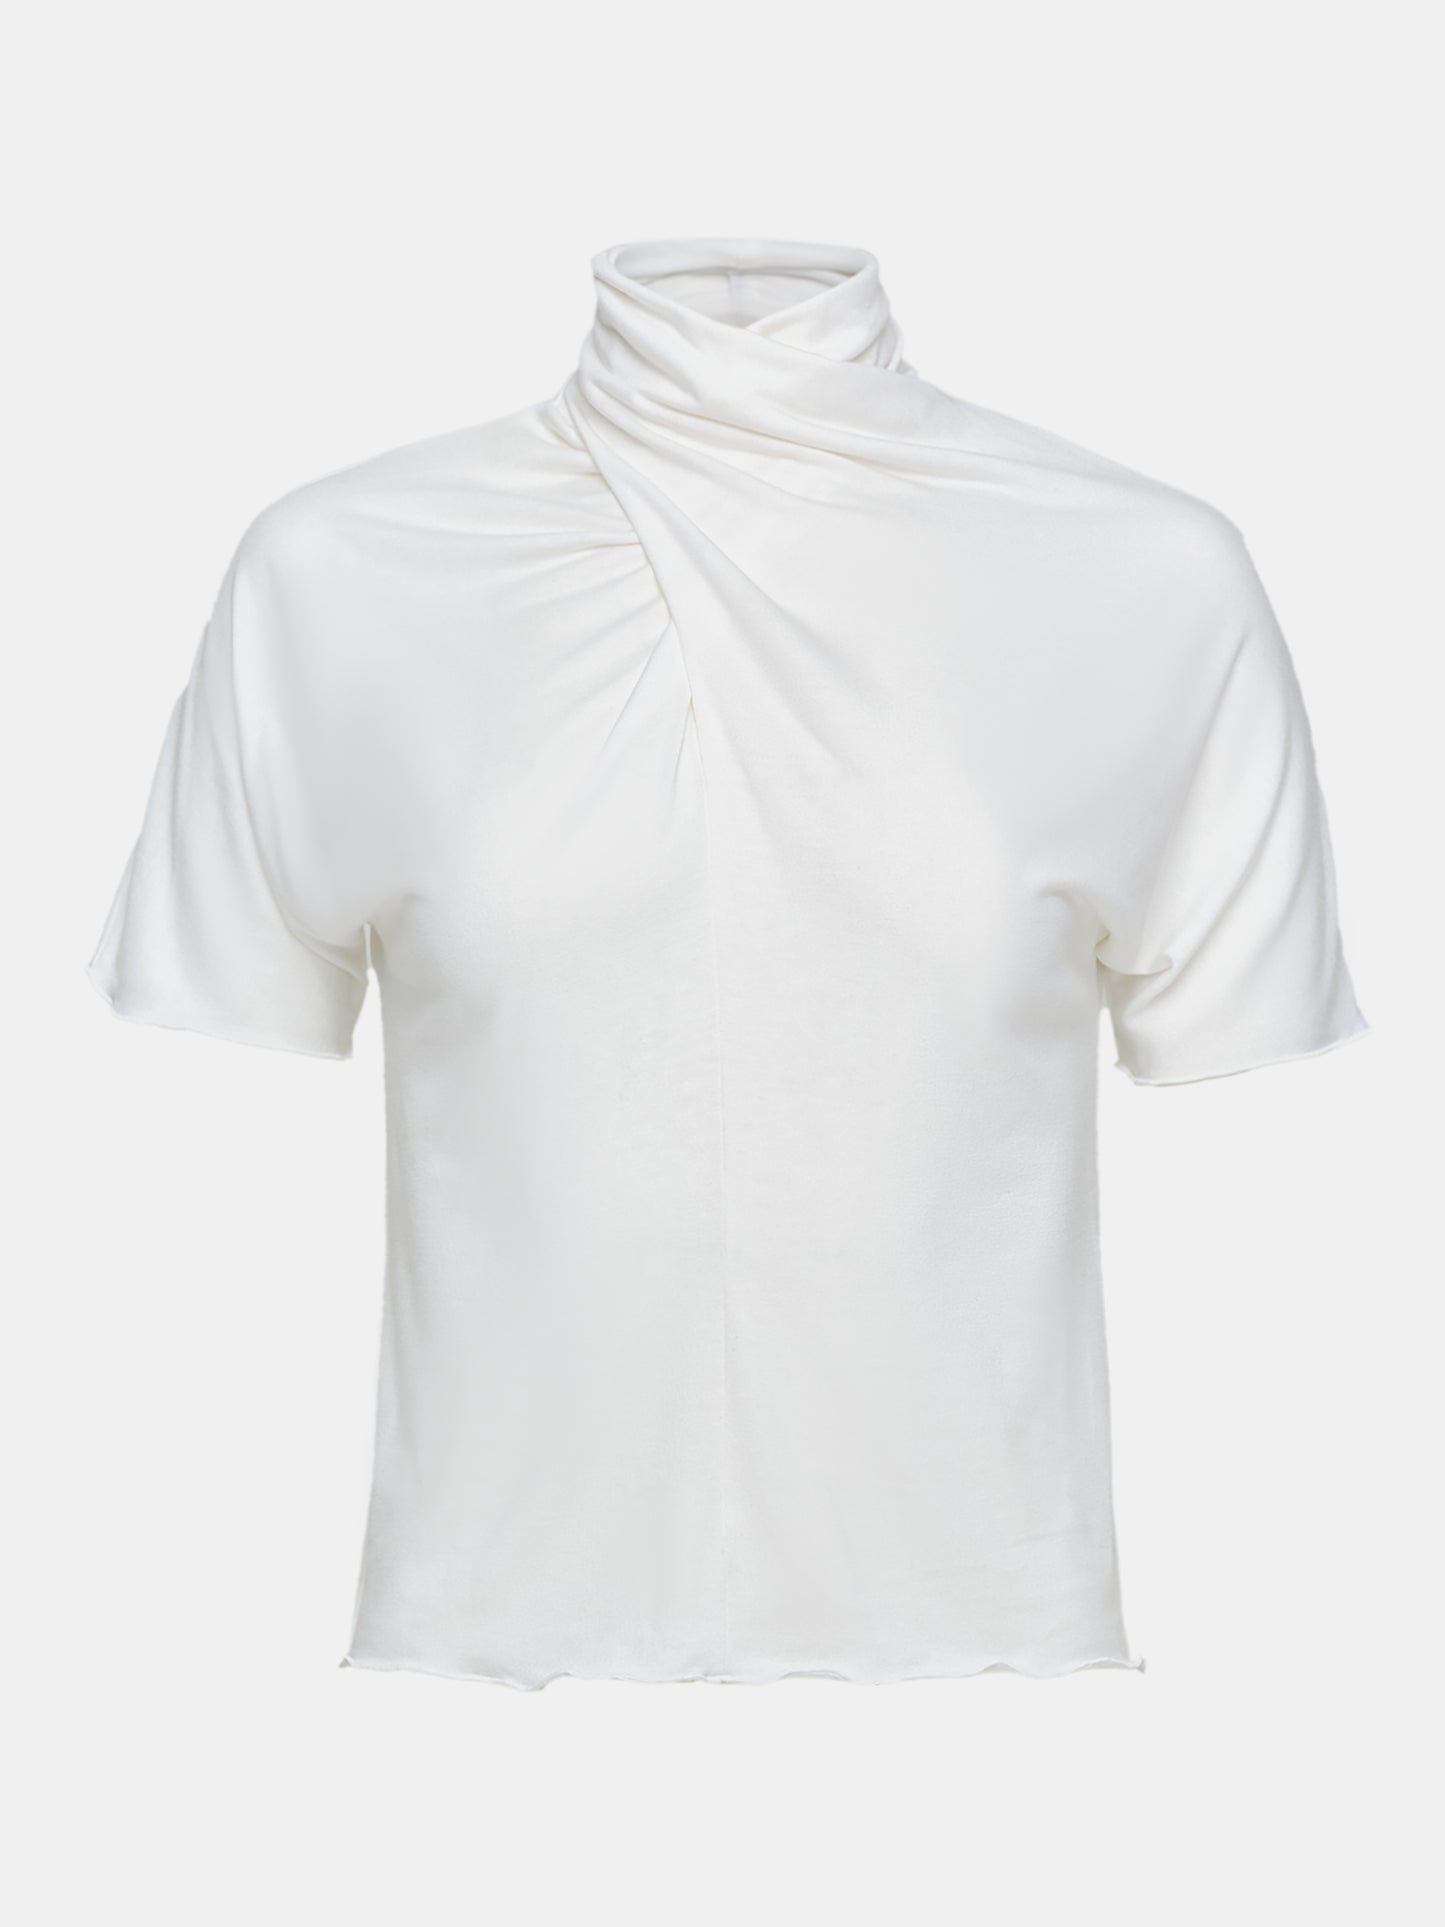 Daye Cross Neck T-Shirt, White